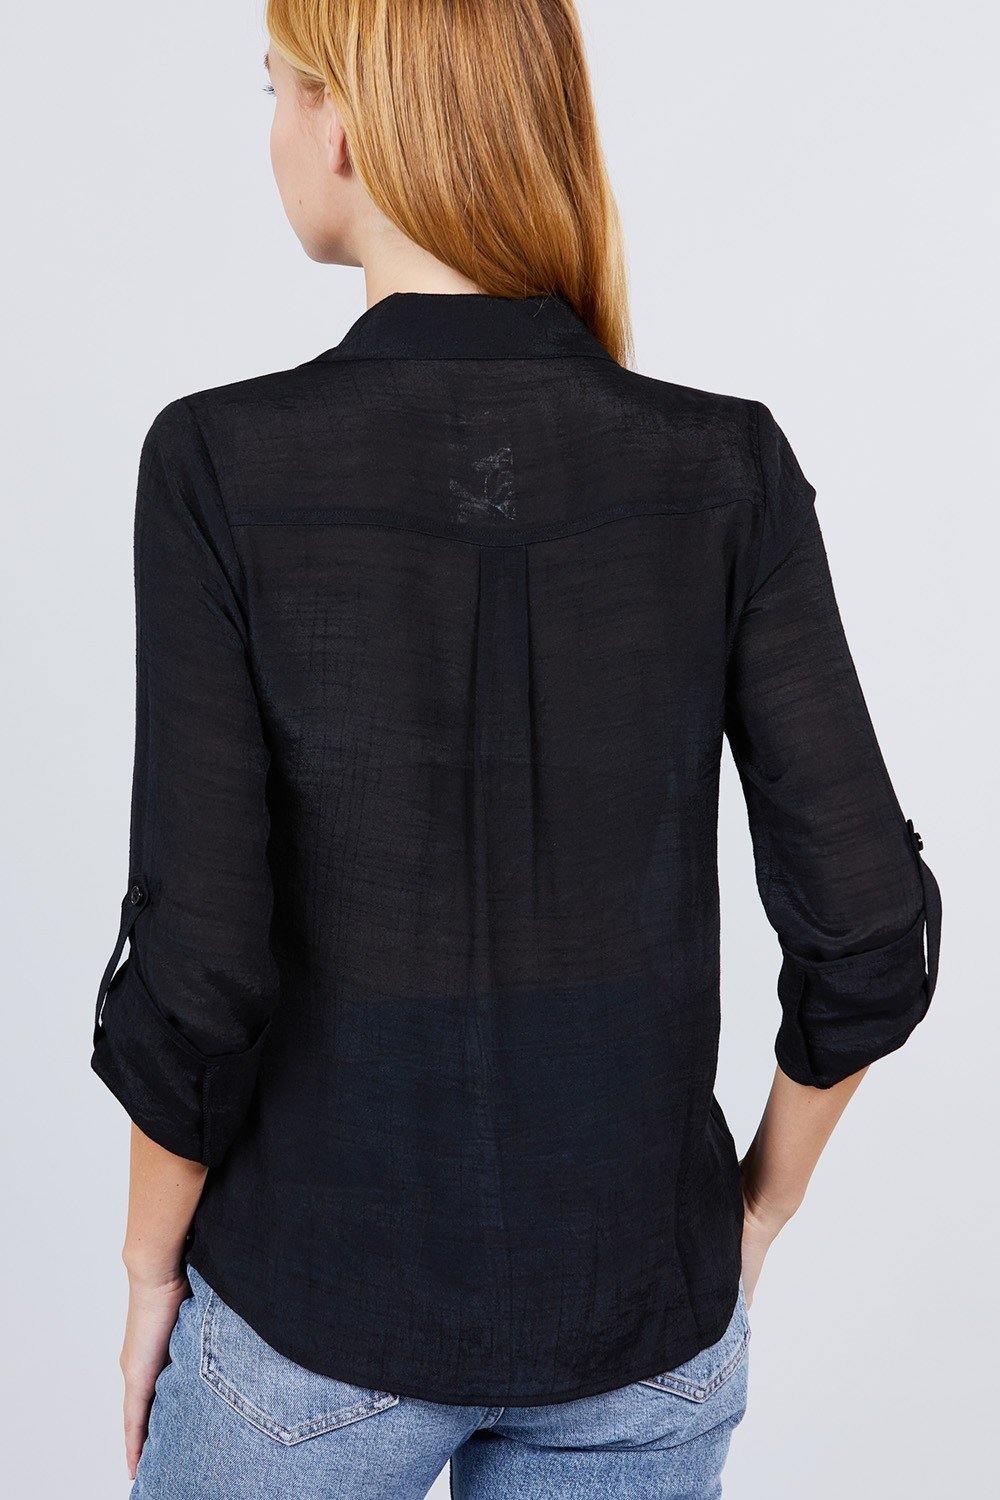 3/4 Roll Up Sleeve With Pocket Woven Shirts - Pearlara